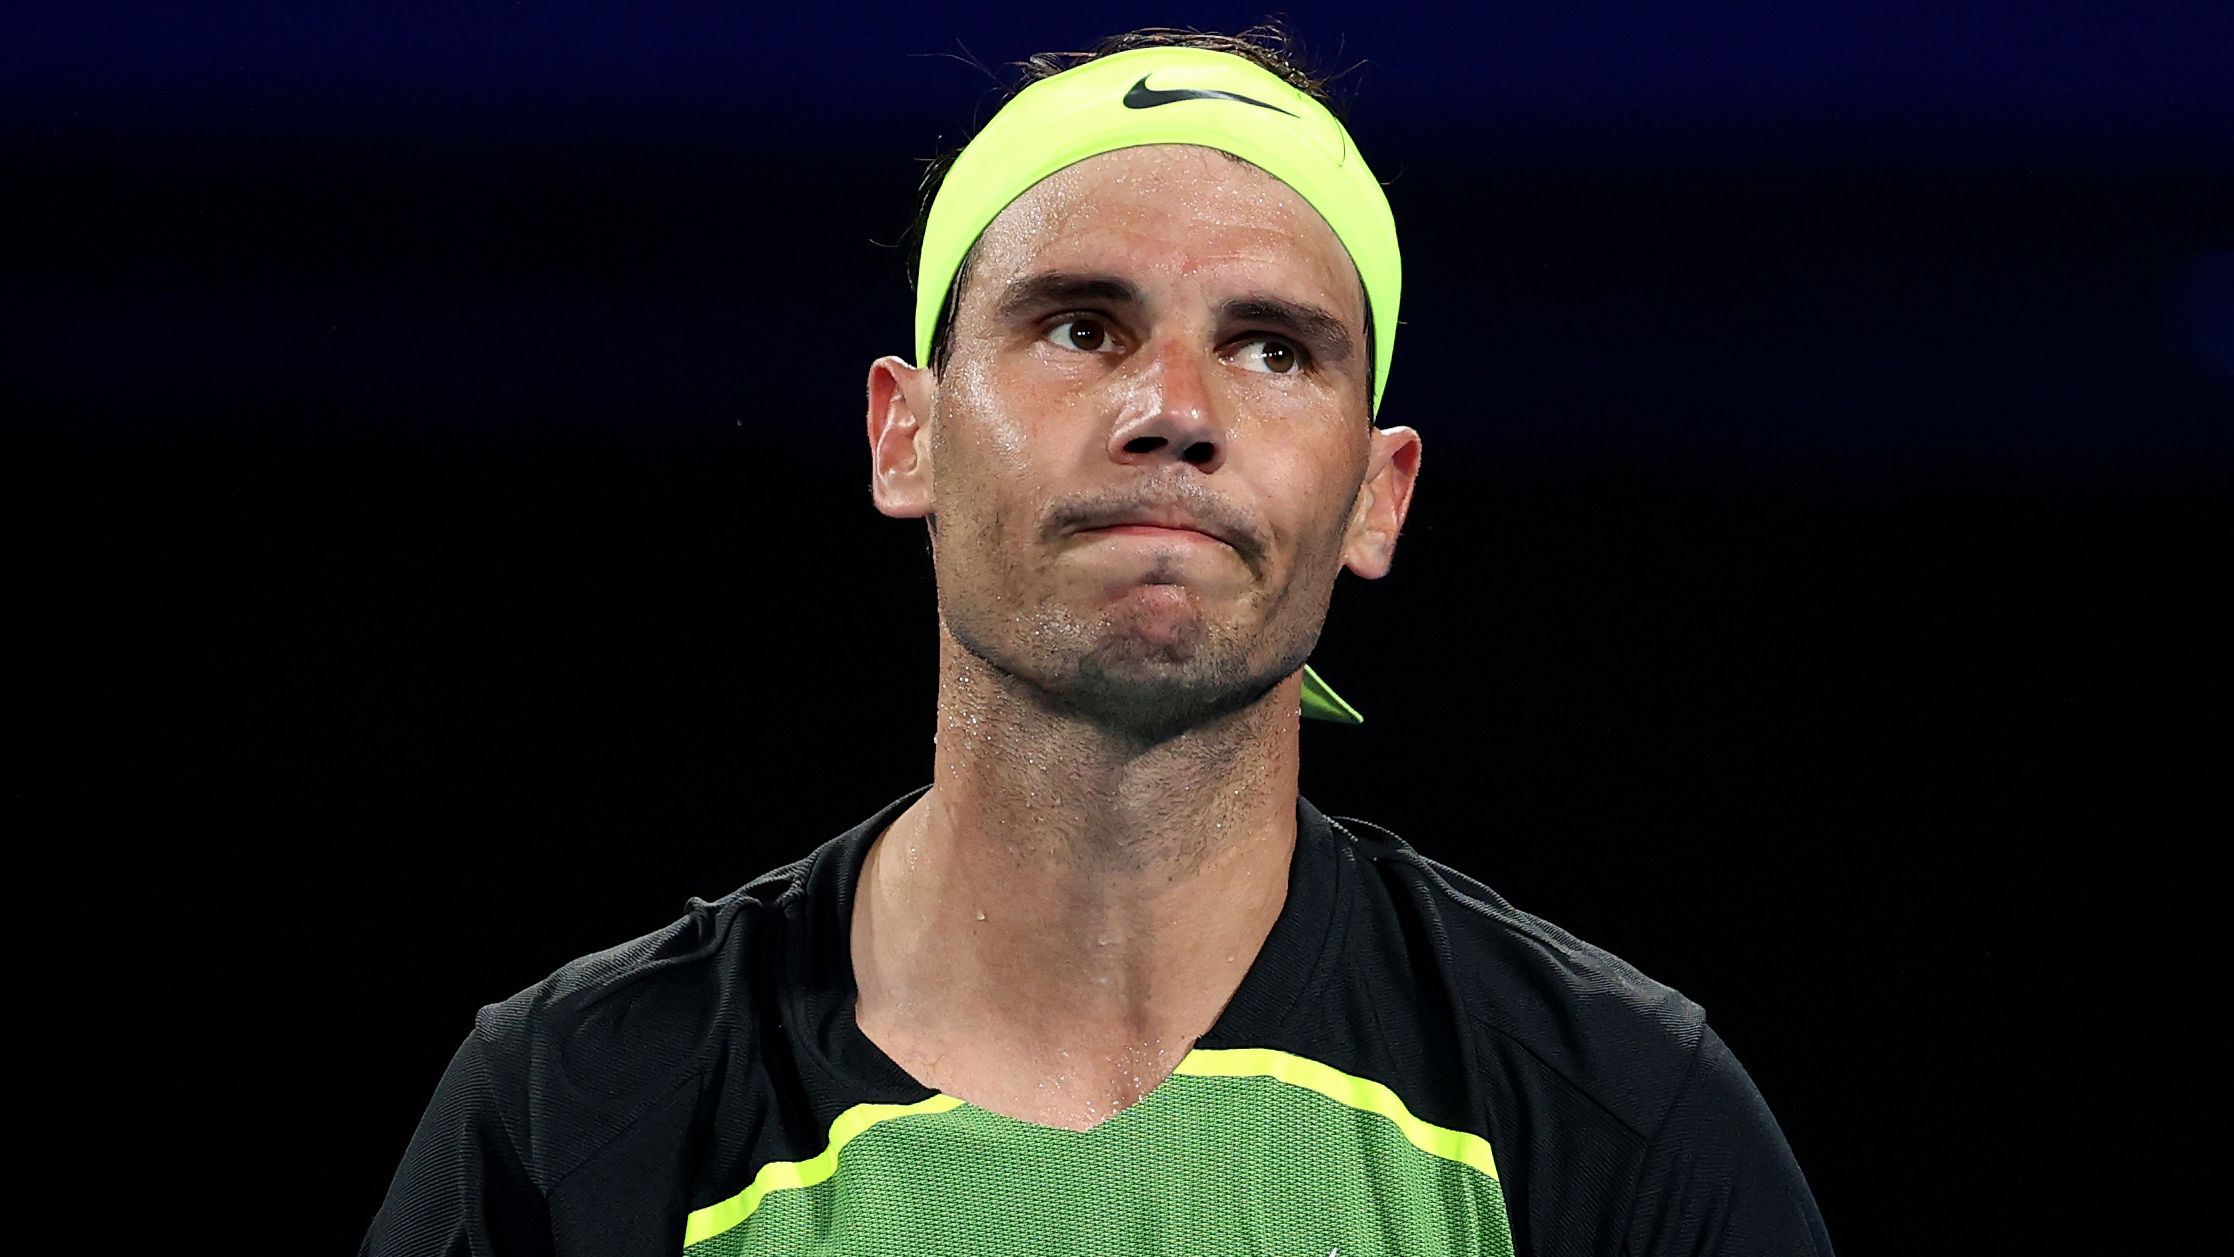 Rafael Nadal 'in good shape' ahead of Australian Open despite back-to-back losses